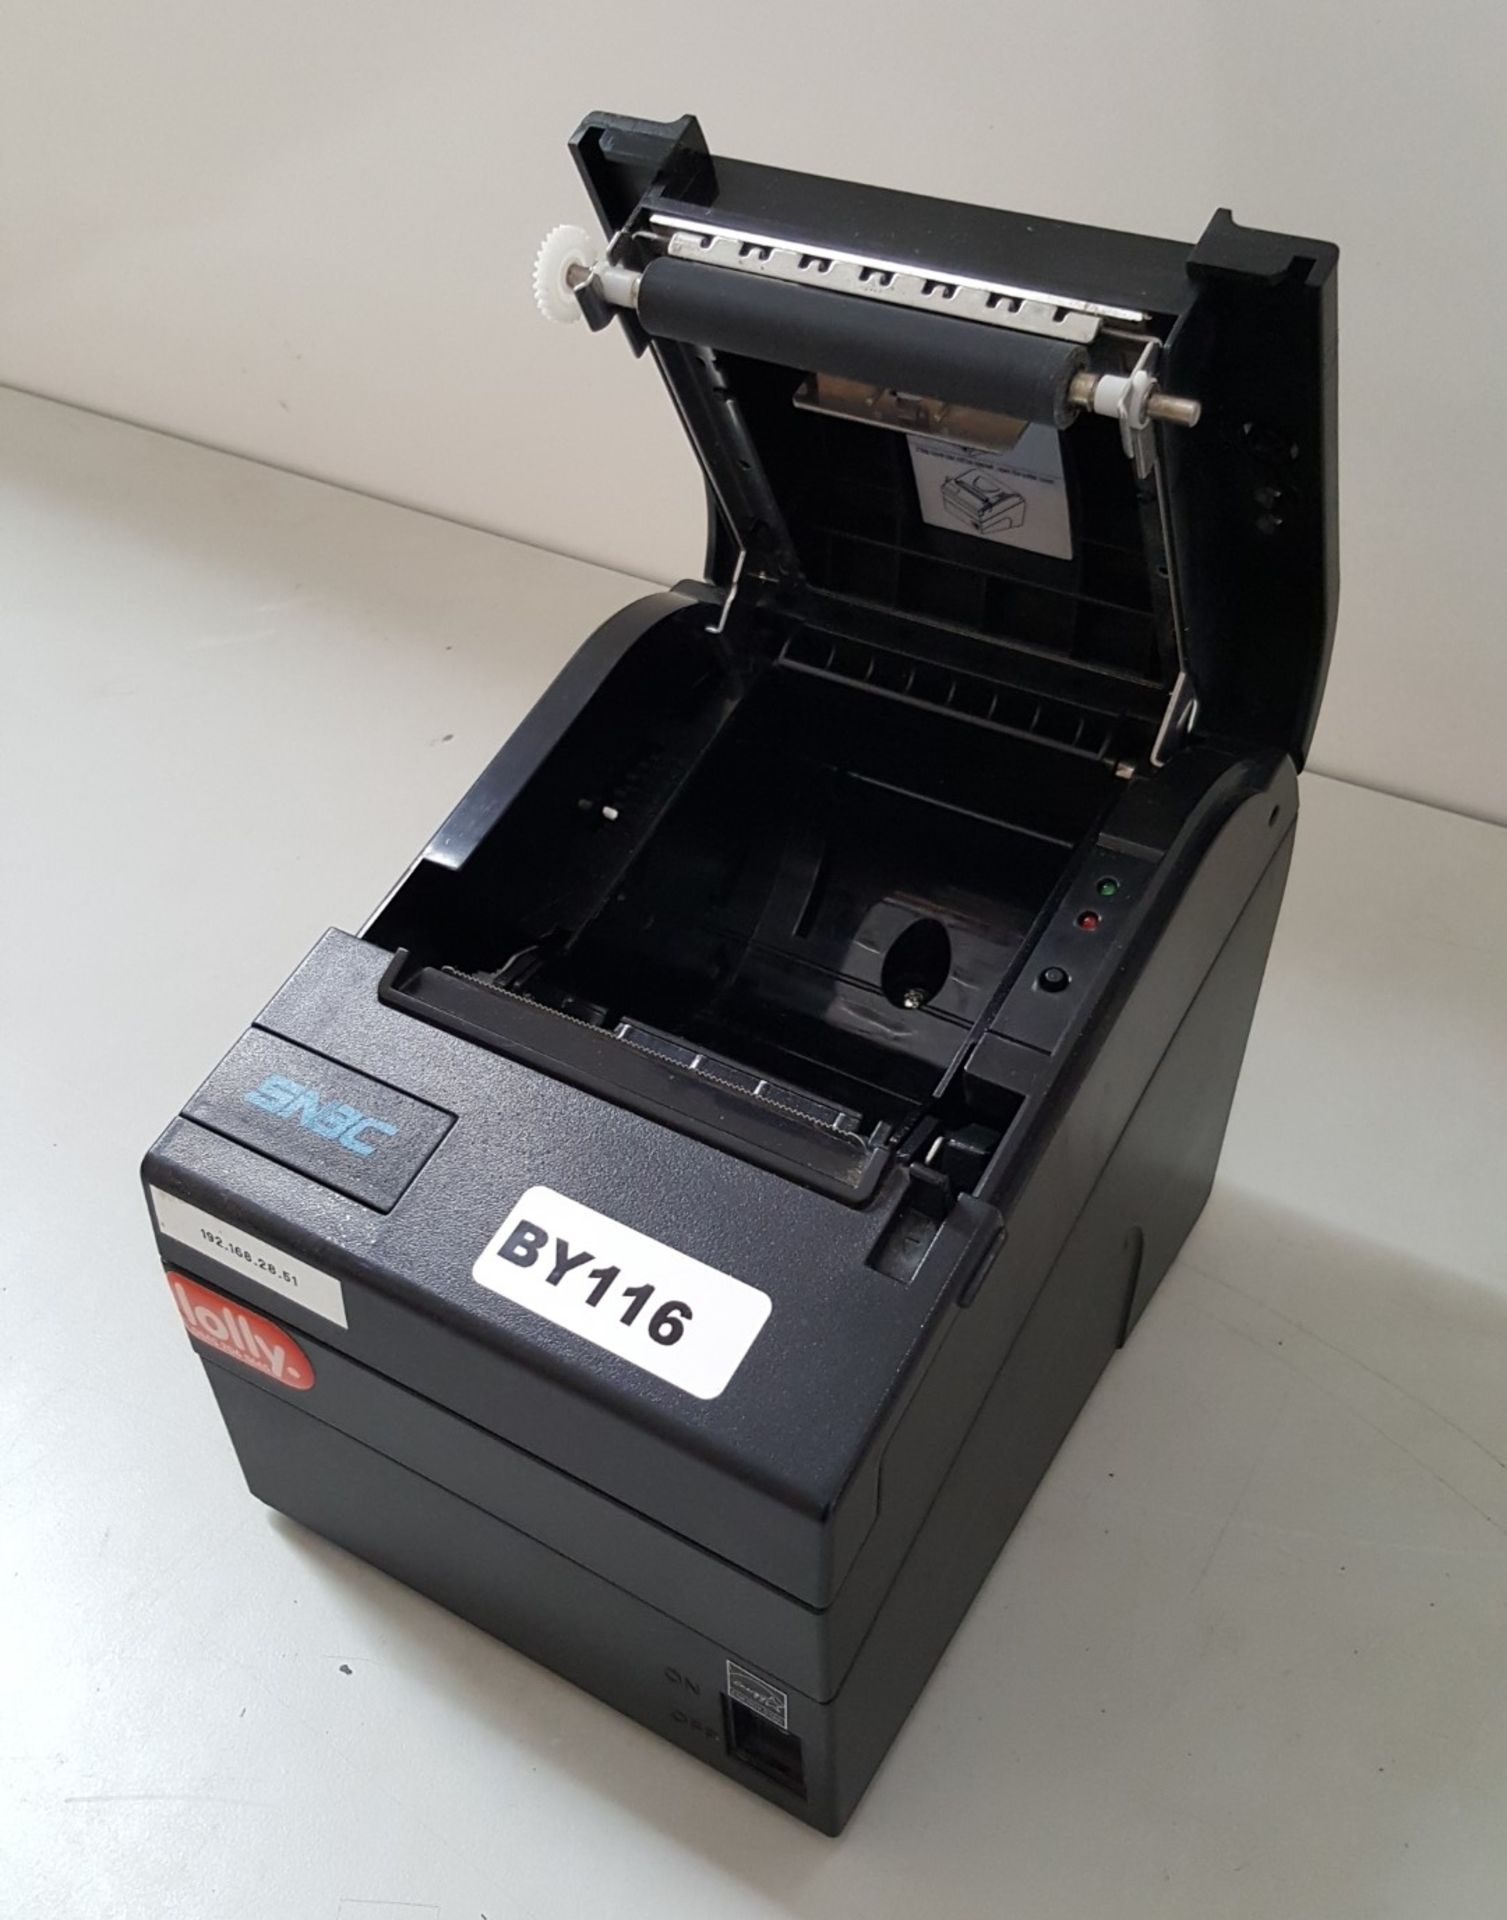 1 x SNBC BTP-R880NP USB Thermal Receipt Printer - Ref BY116 AC3 - Image 3 of 3